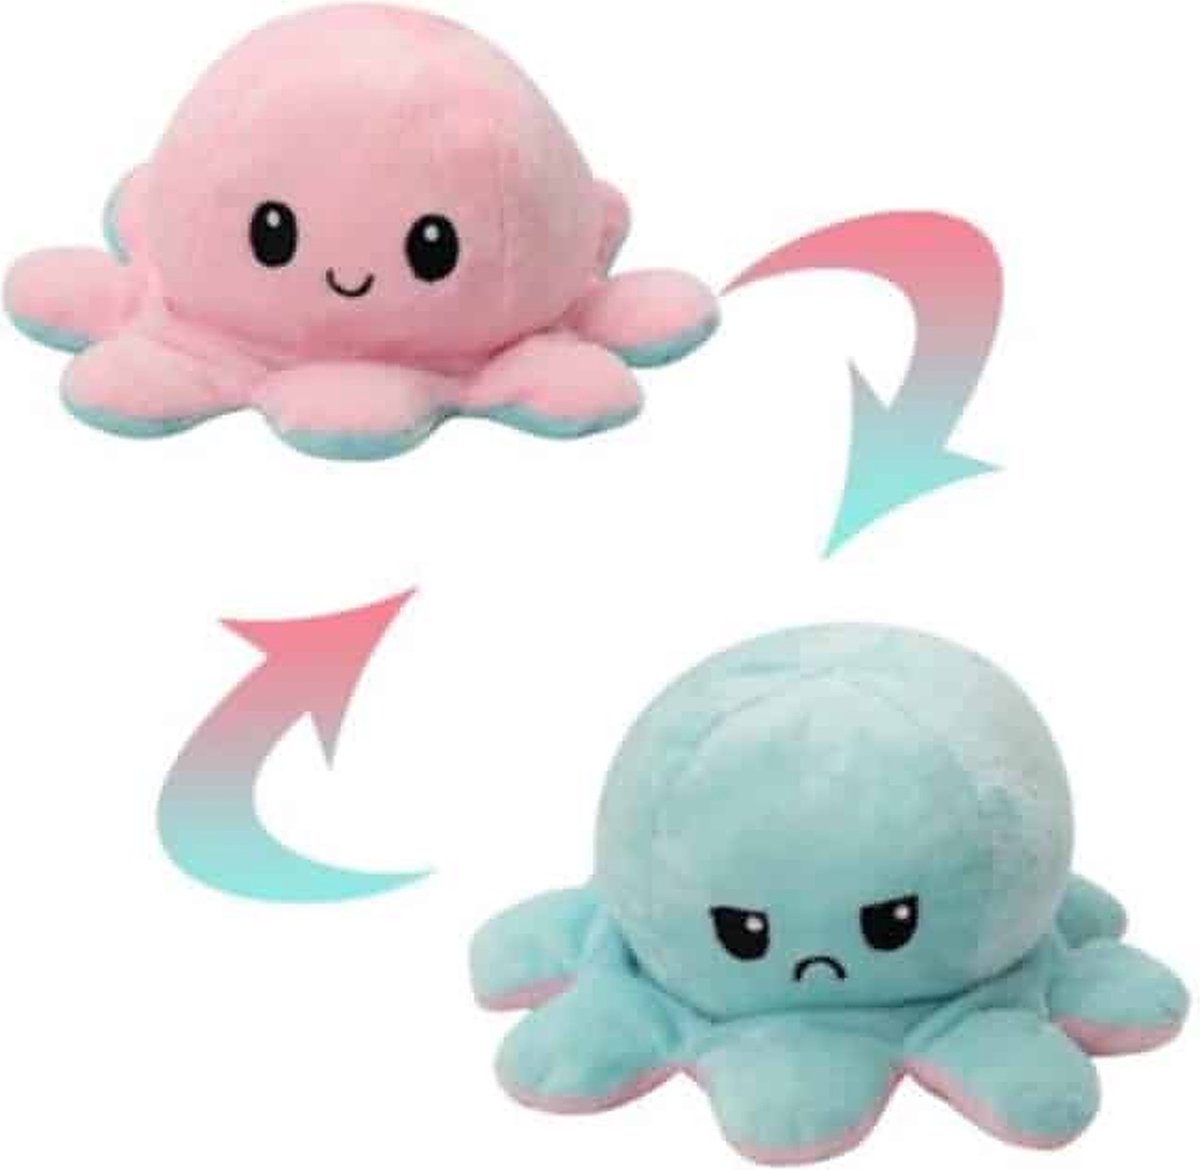 Octopus mood knuffel - Emotie knuffel - Knuffel - Mood - Verwisselbaar emotie - Kleurenmix - Merkloos